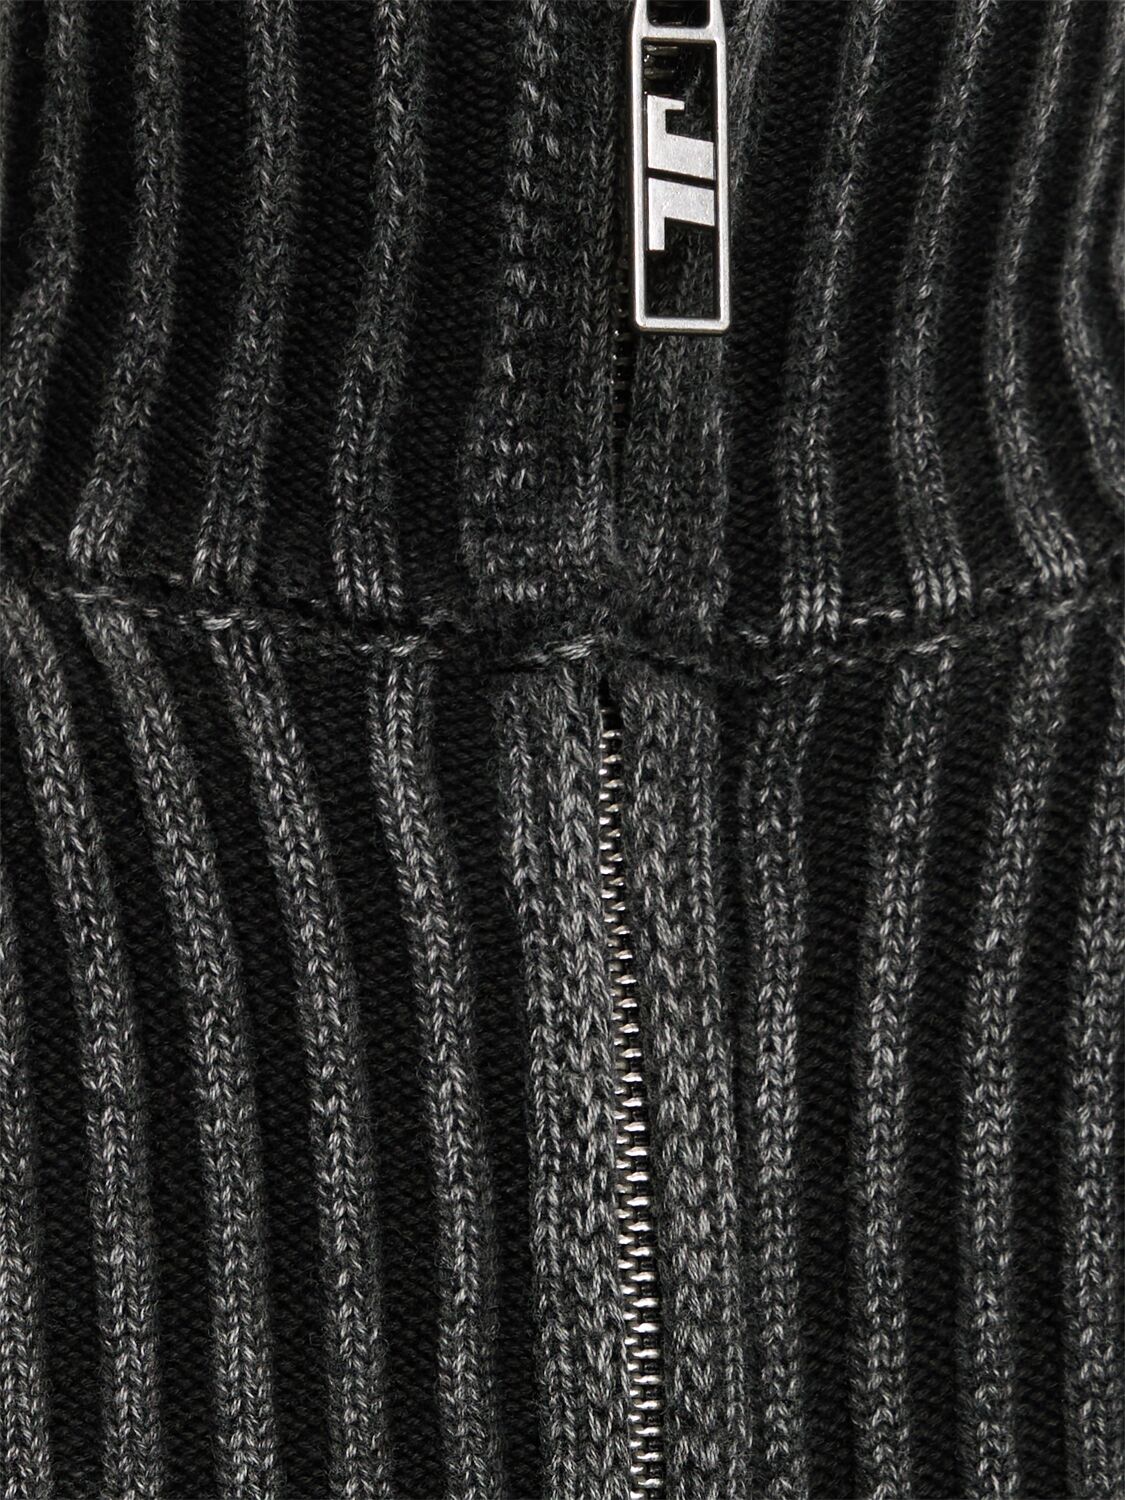 Shop Jaded London Washed Black Lucid Knit Sweater